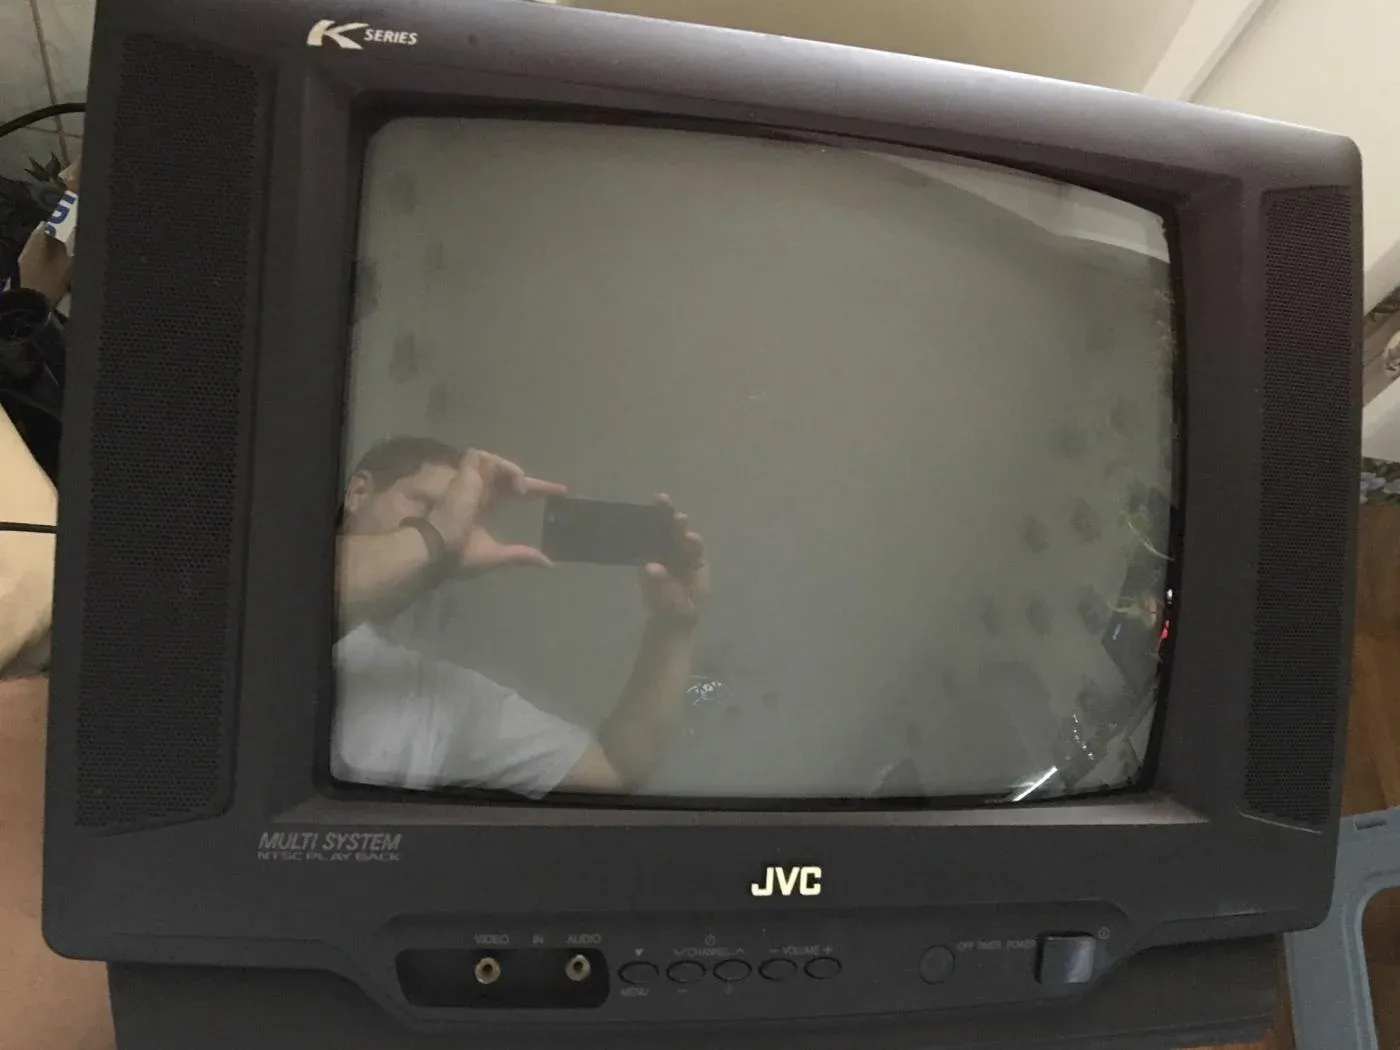 Купить телевизор бу в красноярске. JVC av-k21t. Телевизор JVC av g21ot. JVC Multi System NTSC Playback телевизор. Телевизор JVC stereo 2000 год.